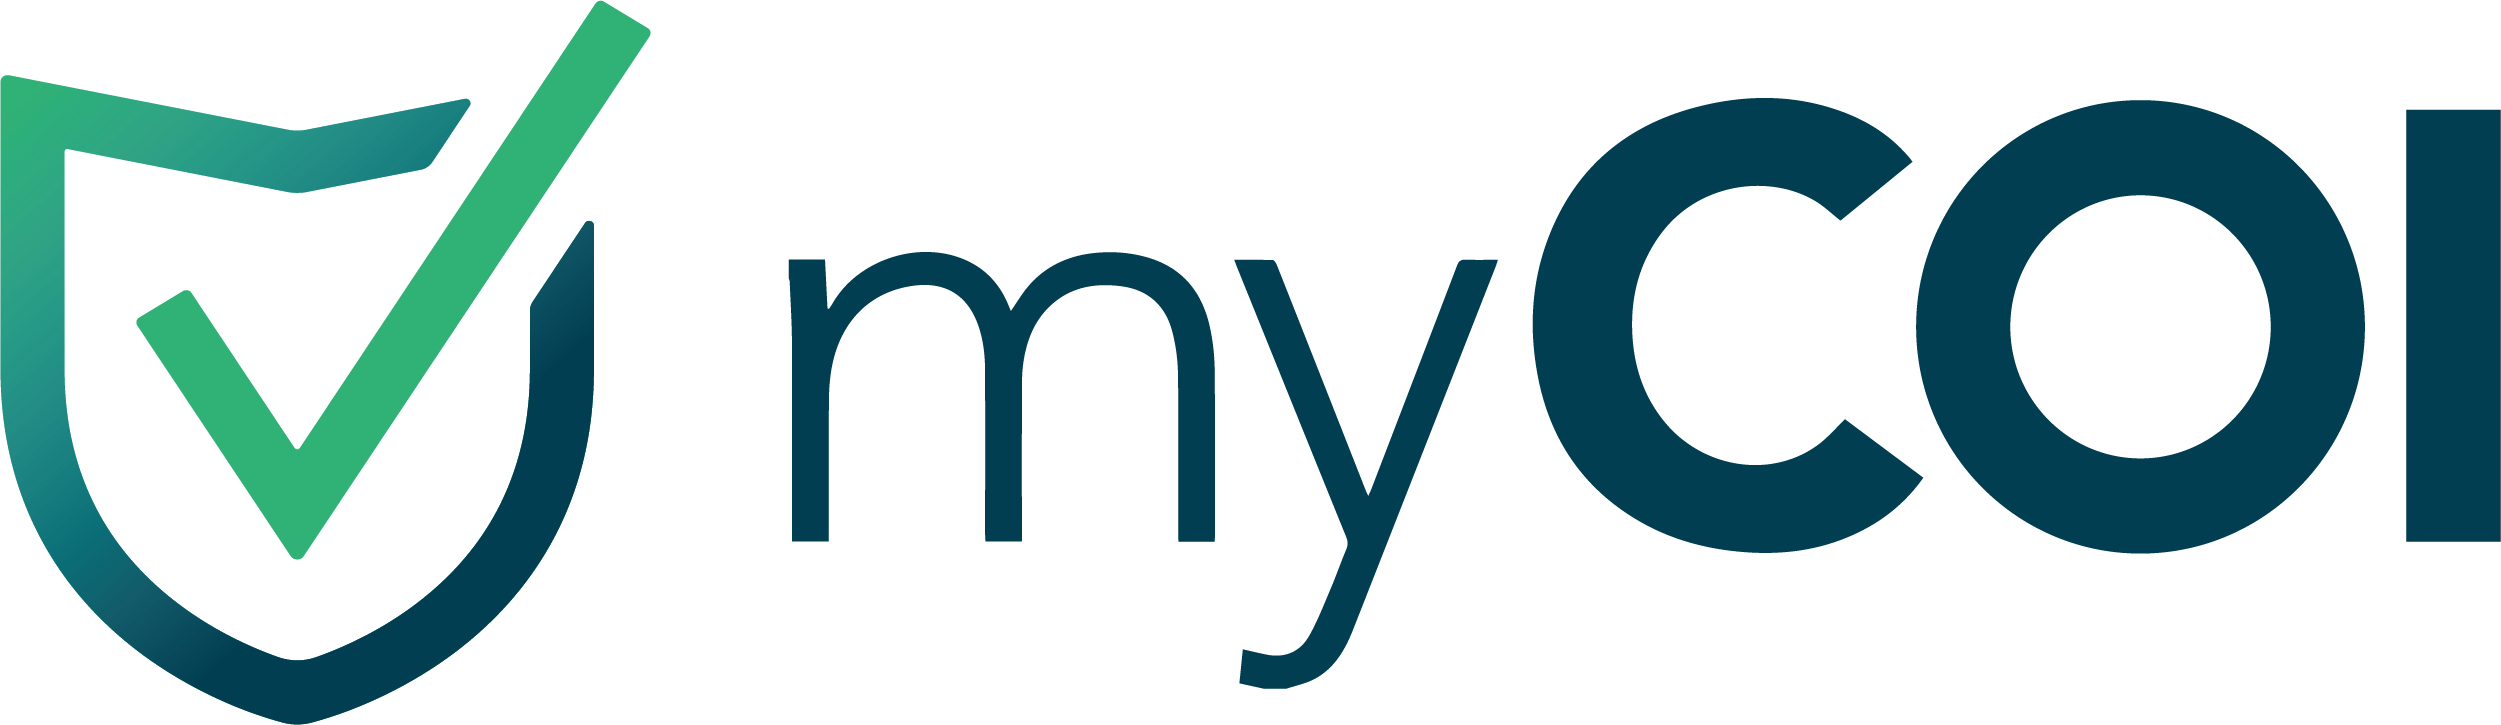 myCOI logo